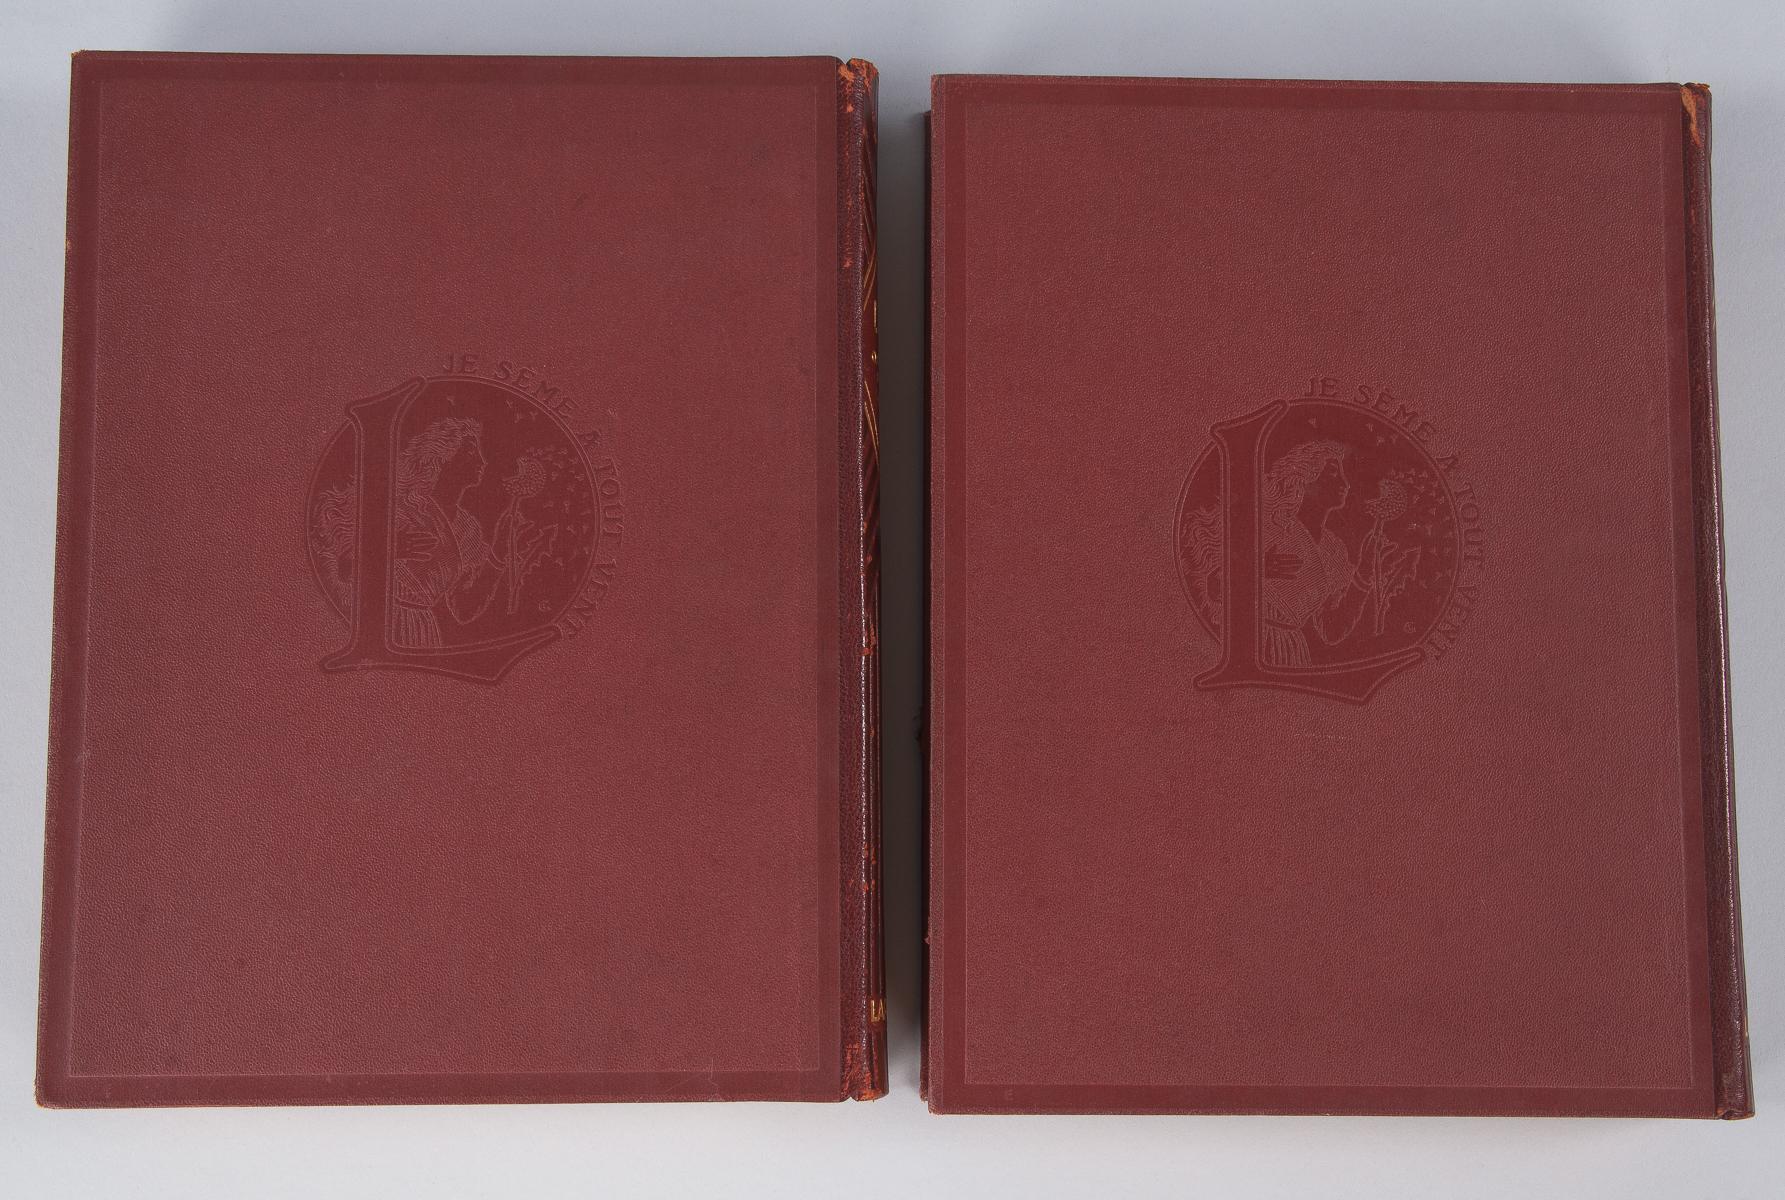 French Art Books, 2 Volumes, 1932 14